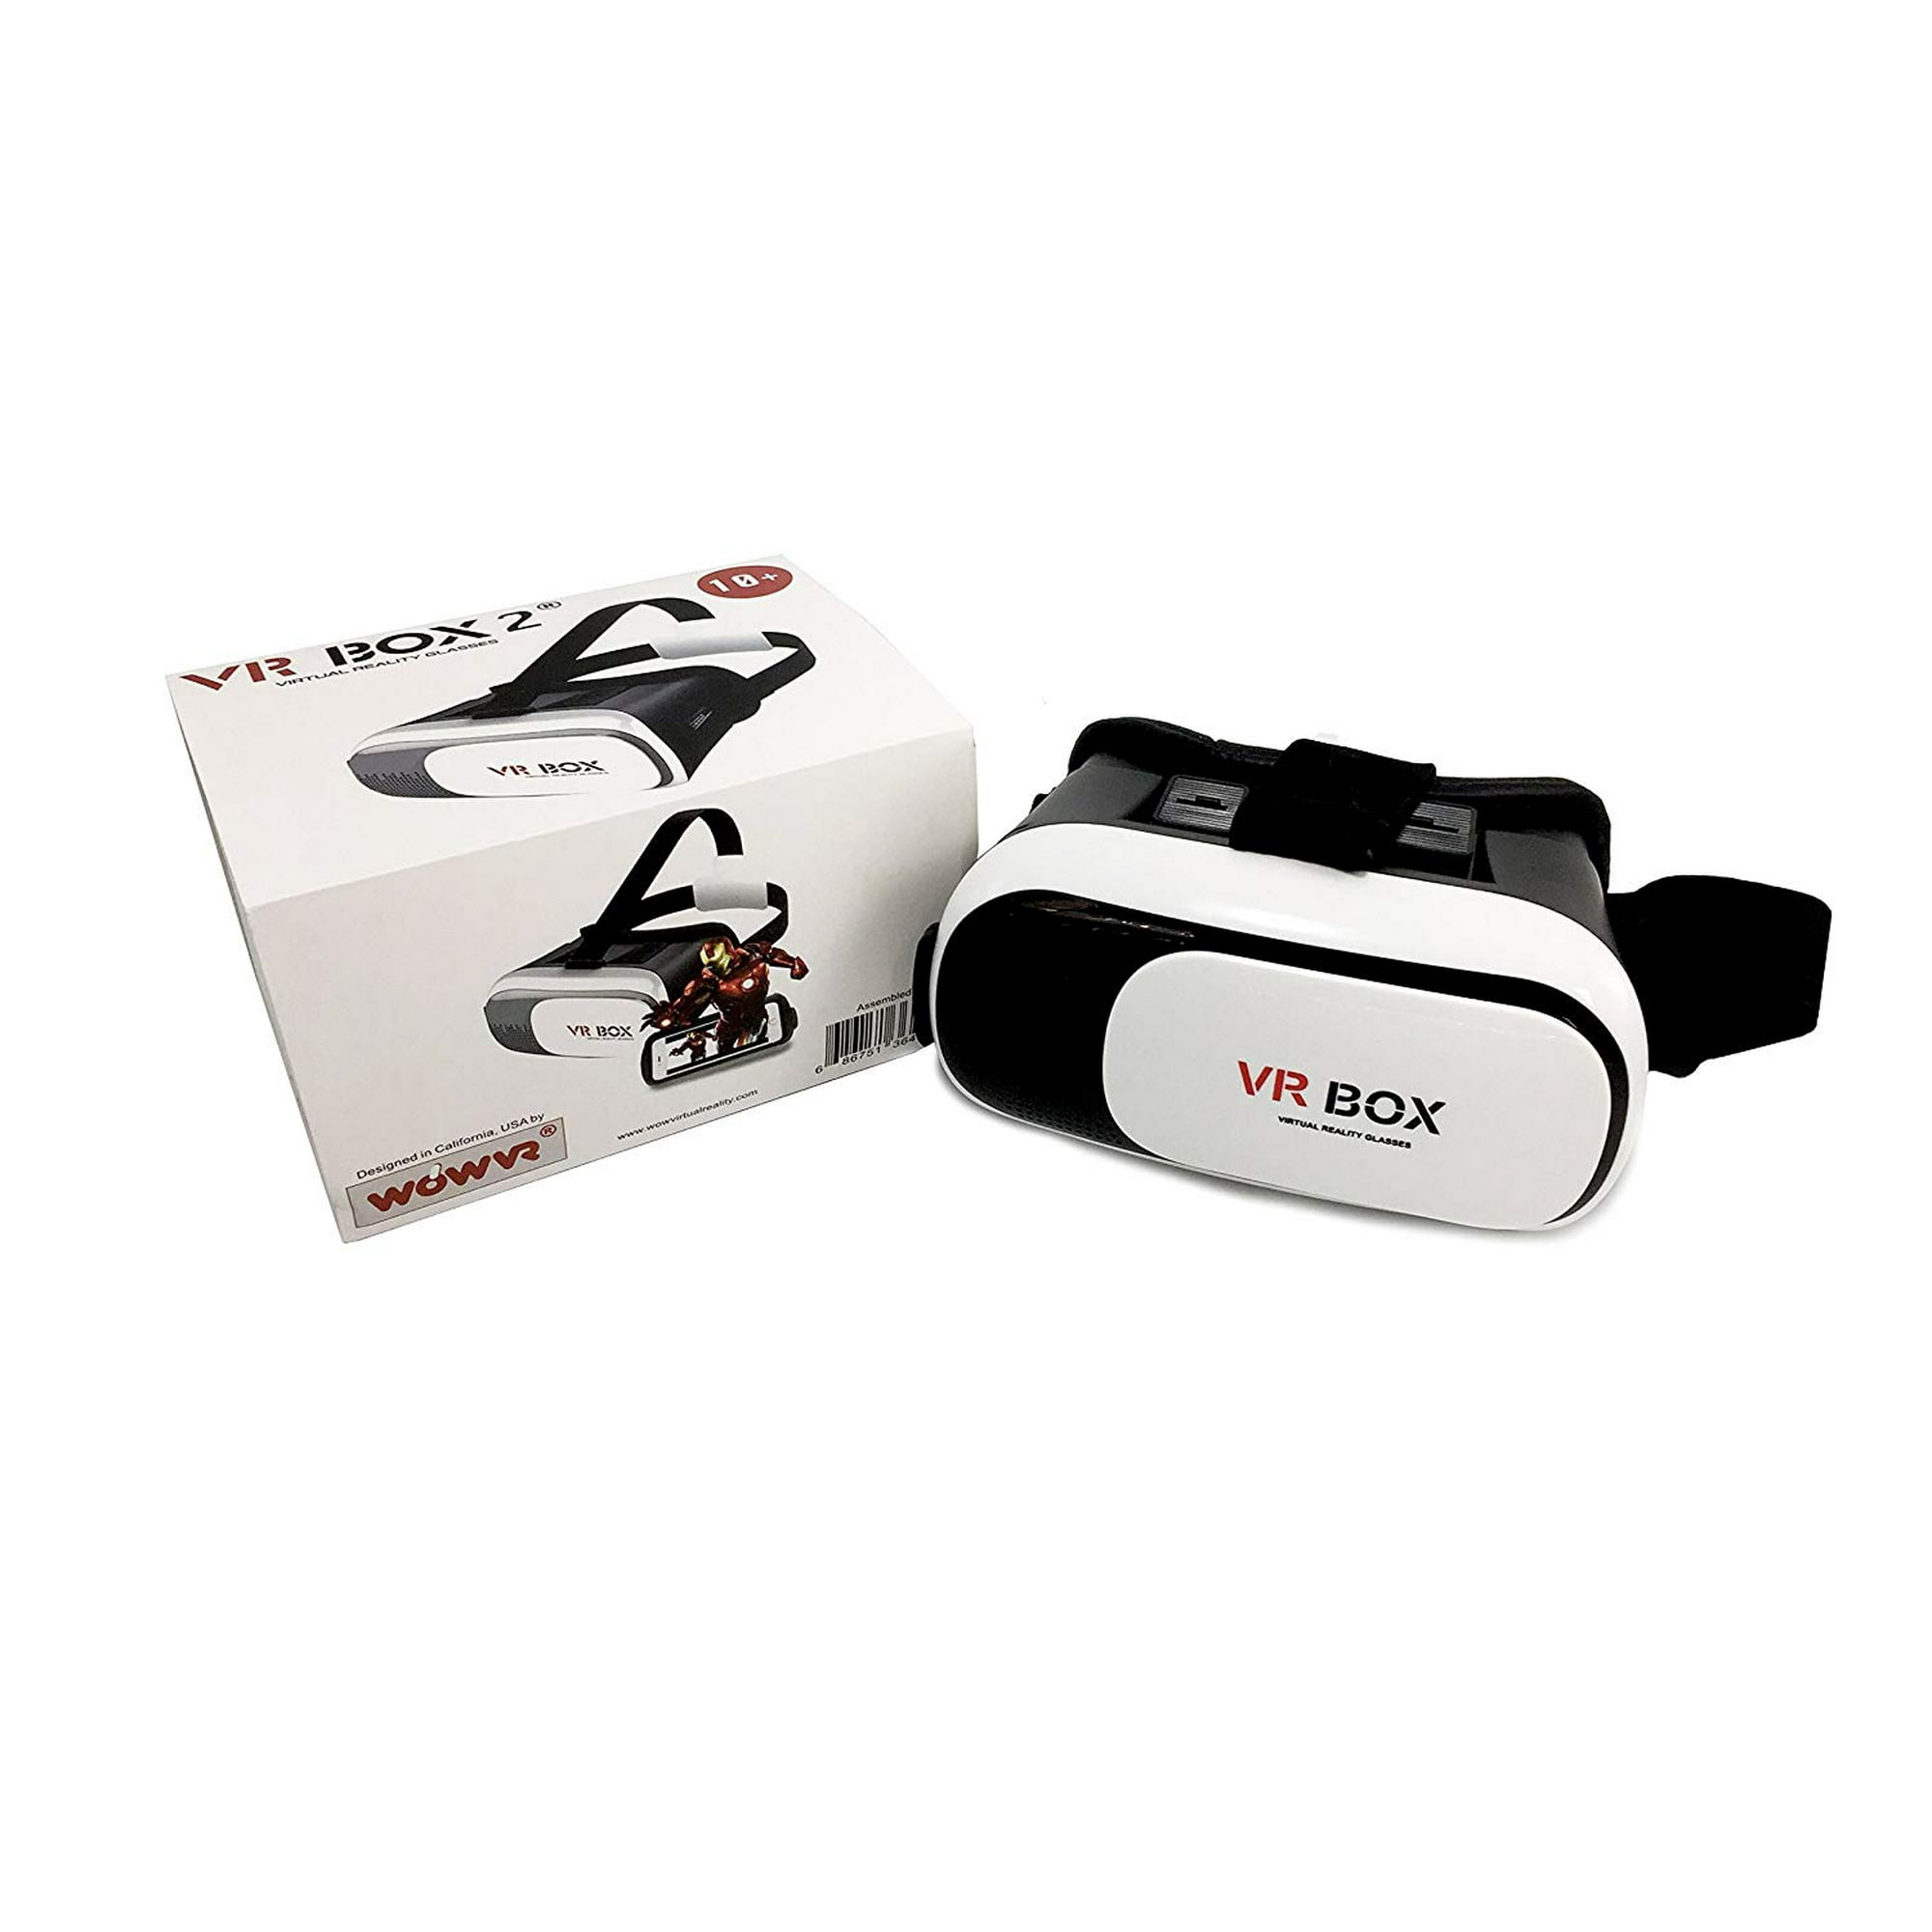 Katastrofe overskæg Mundtlig New 3D Virtual Reality VR Box 2.0 Glasses Smart Phone Universal VR Headset  Goggle Video - Walmart.com